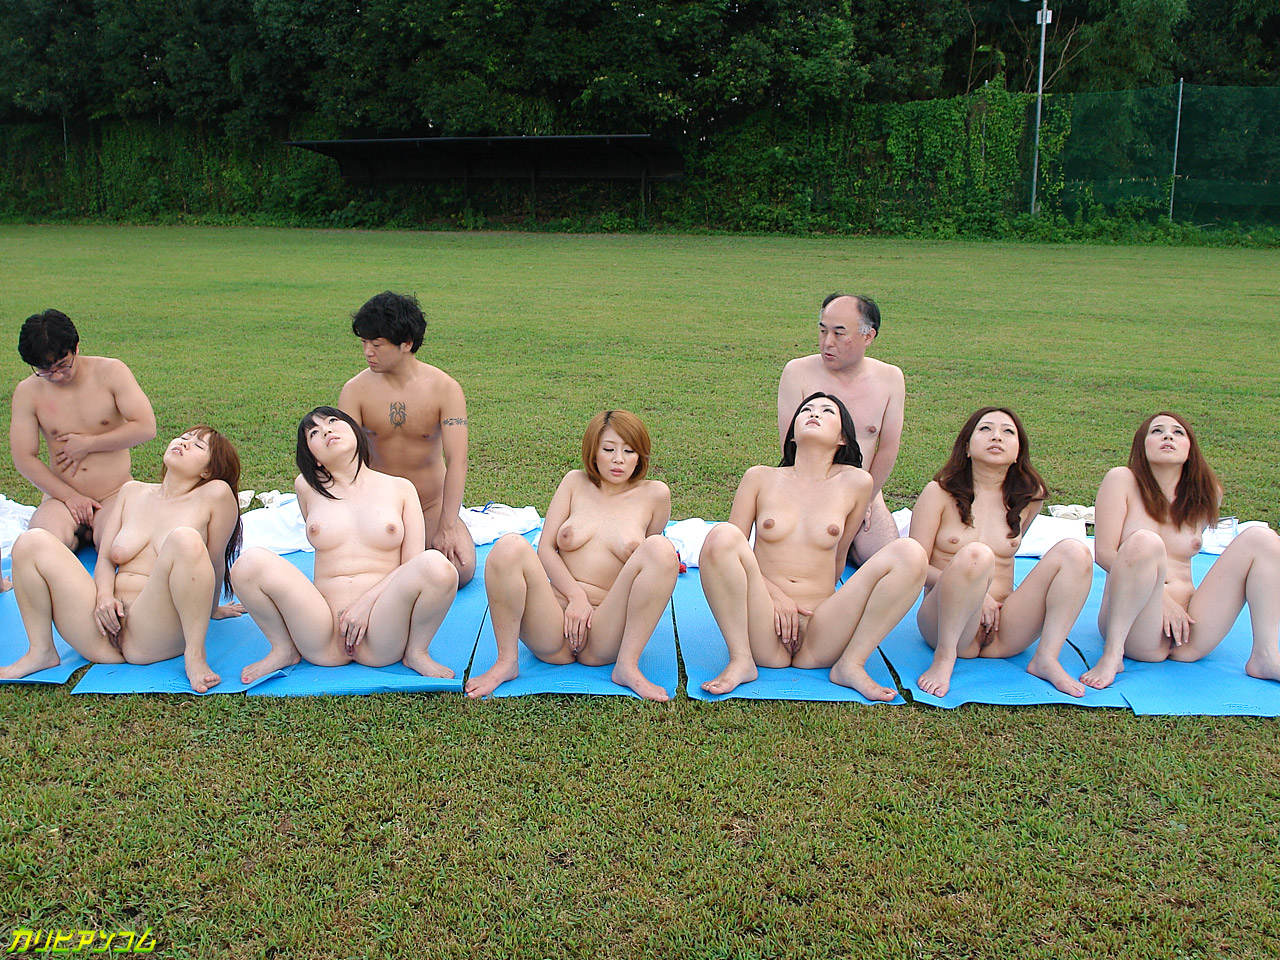 Kinky Asian girls tease with their asses and get rammed in an outdoor session foto pornográfica #423605774 | Caribbeancom Pics, Ai, Ami, Eri, Kohaku, Maeshima, Makino, Miyazaki, Mizushima, Murase, Reira, Sawakita, Serikawa, Uta, Yuka, Yuma, Japanese, pornografia móvel